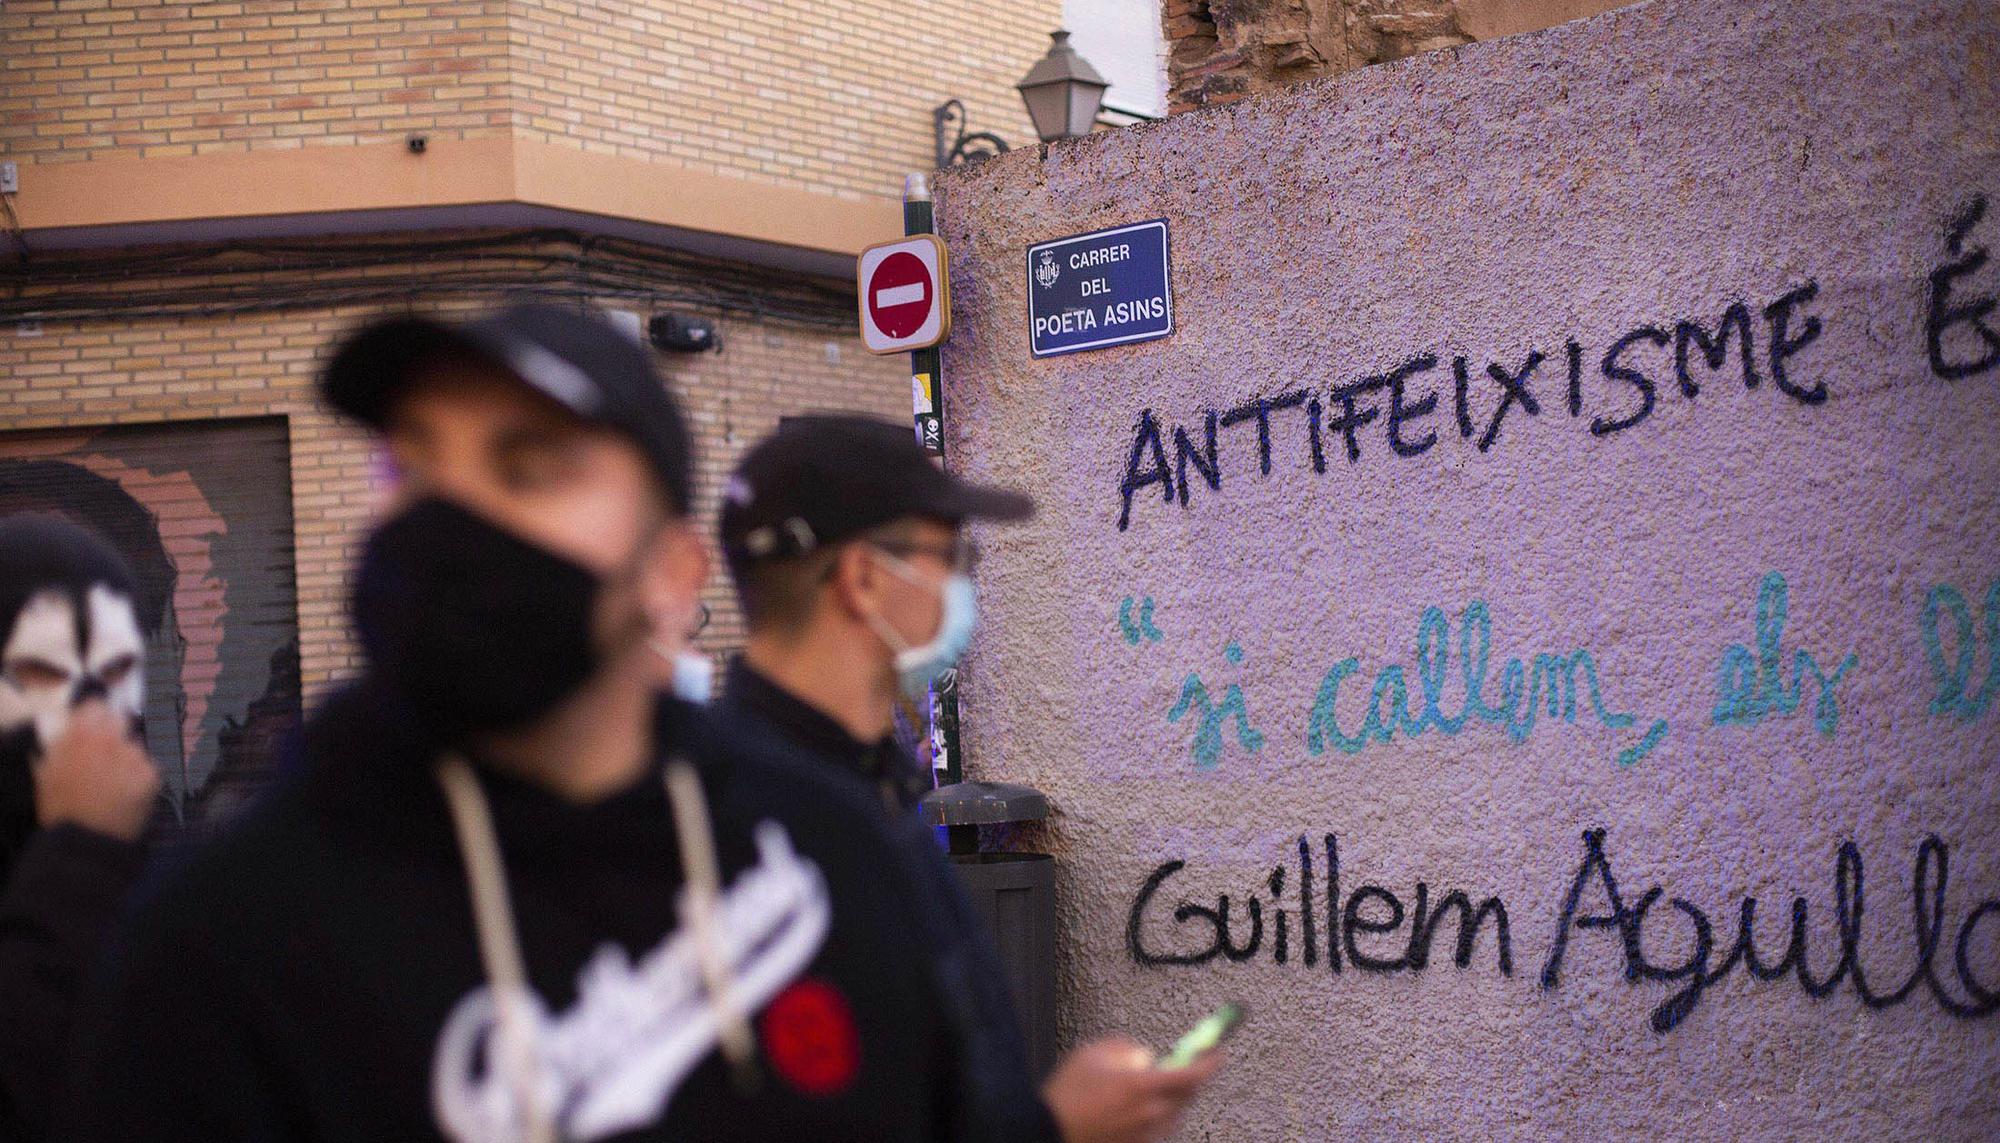 Cinc Dècades Antifeixisme País Valencià 2